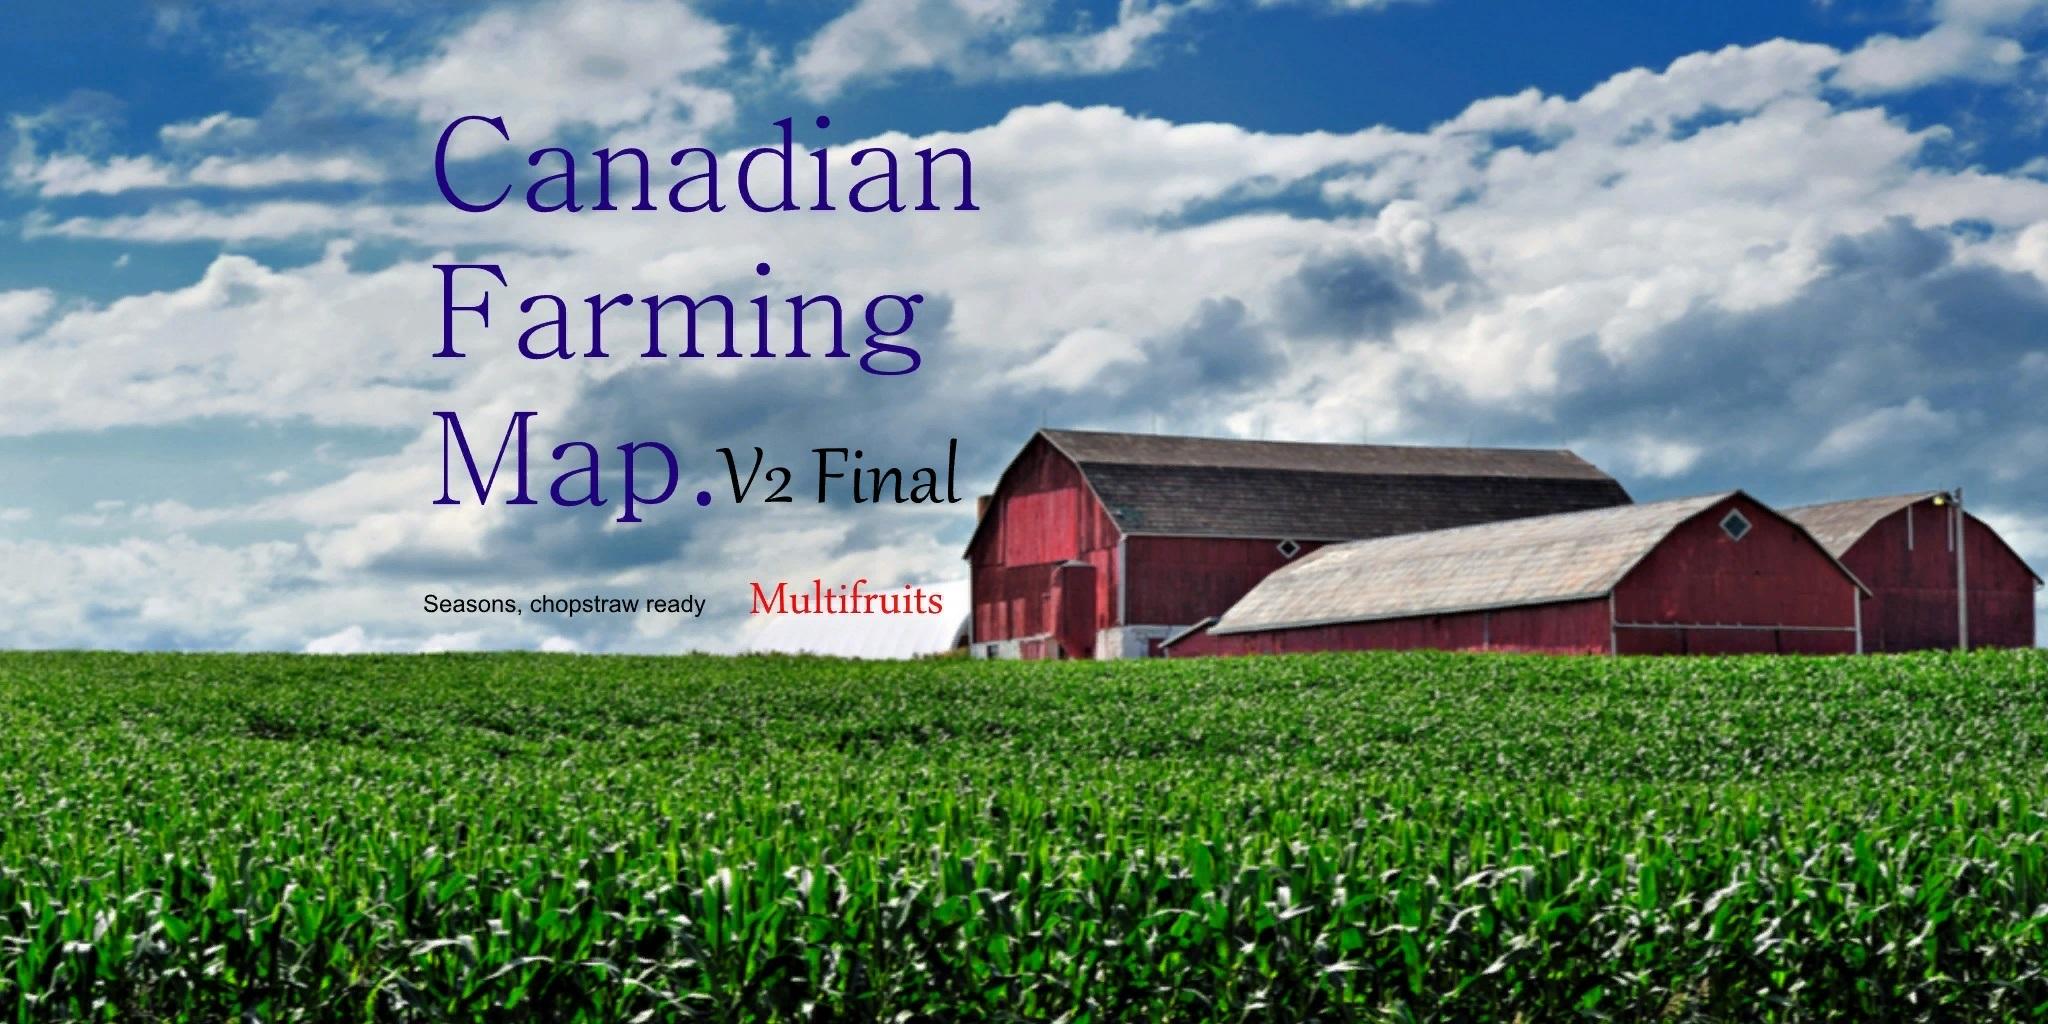 FS17 - Canadian Farming Map V2 Final